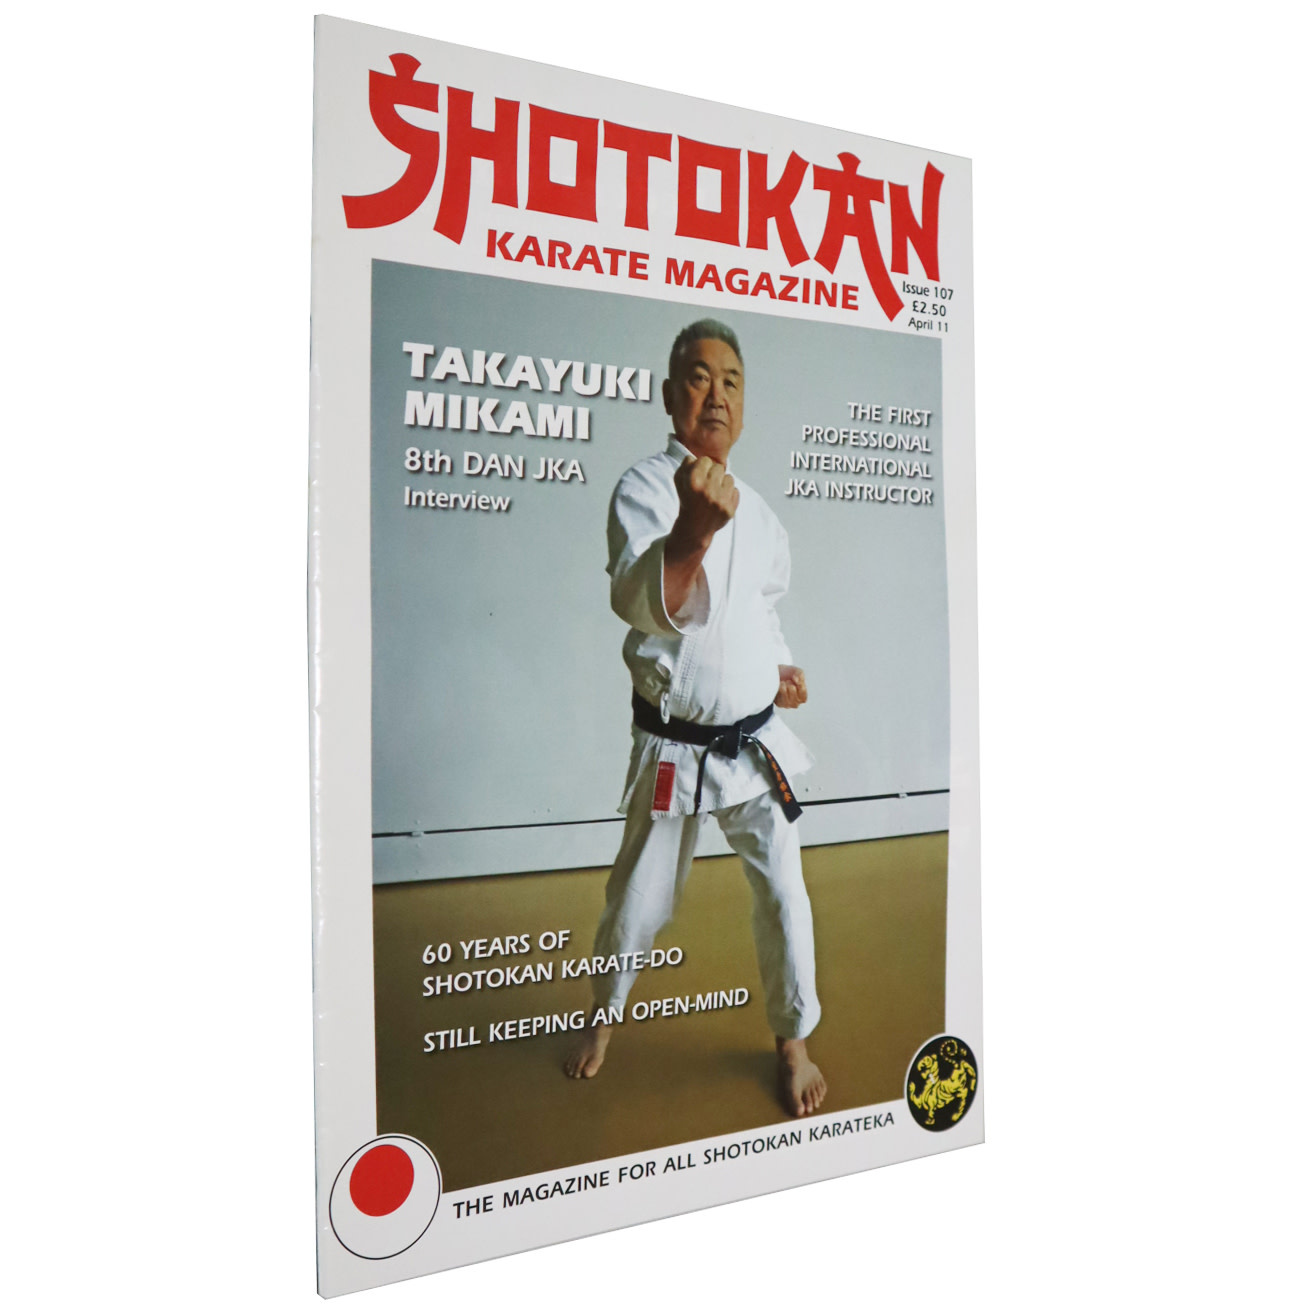 Shotokan Karate Magazine Issue 107 Enso Martial Arts Shop Bristol 